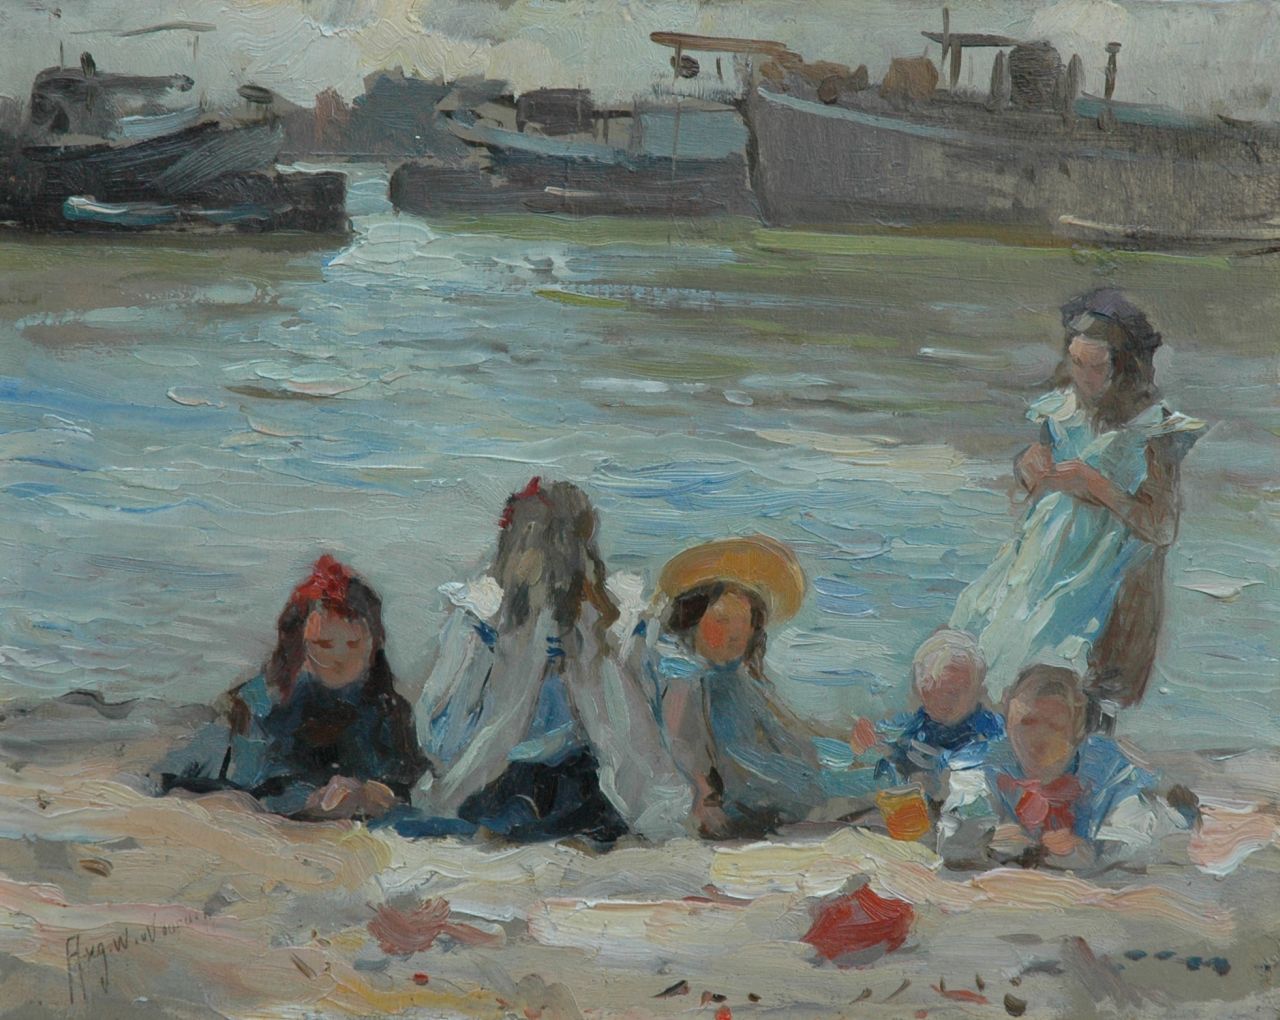 Voorden A.W. van | August Willem van Voorden, Playing children alongside the canal, oil on panel 27.2 x 34.2 cm, signed l.l.